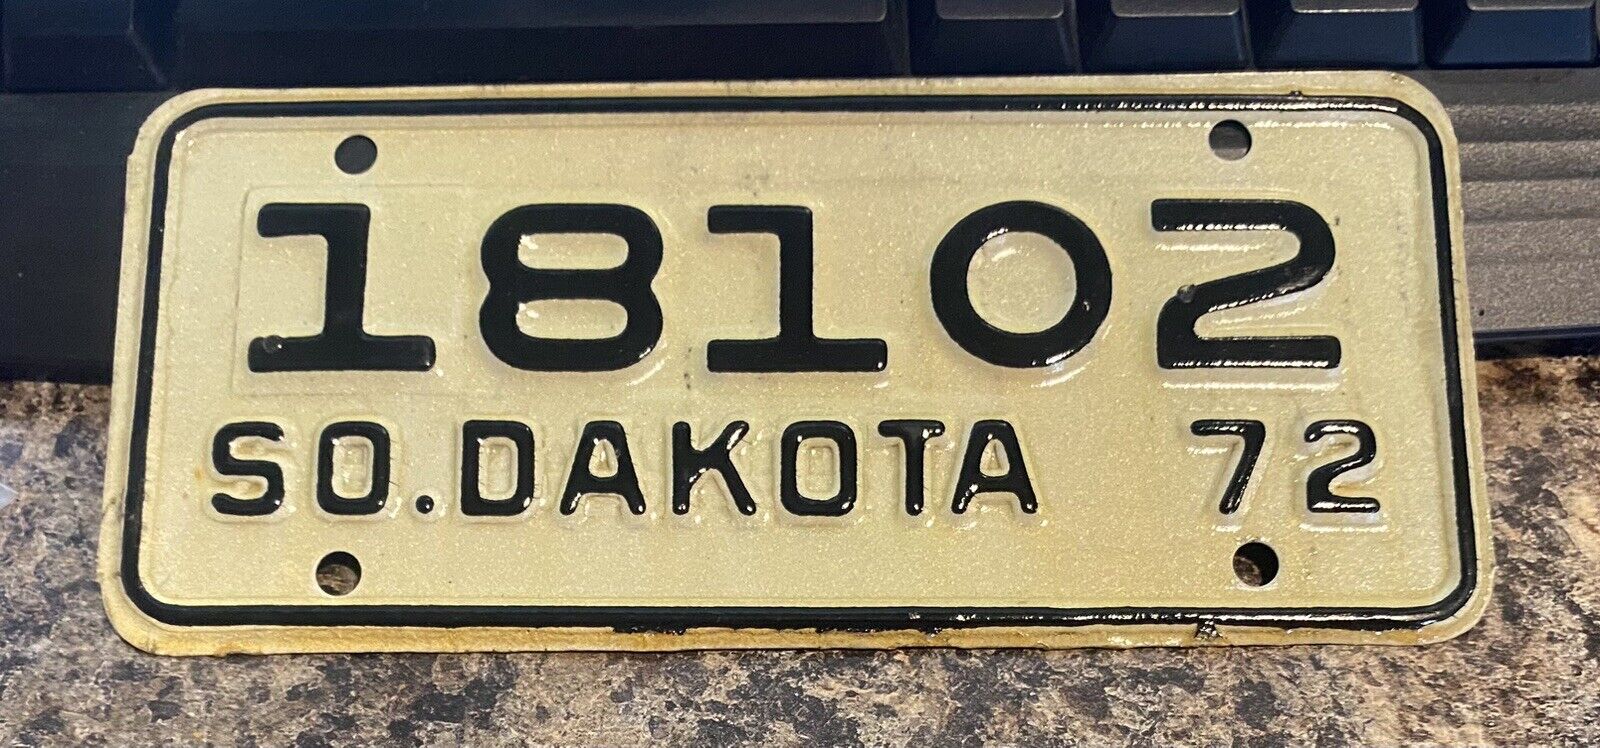 1972 South Dakota motorcycle license plate - Good Shape